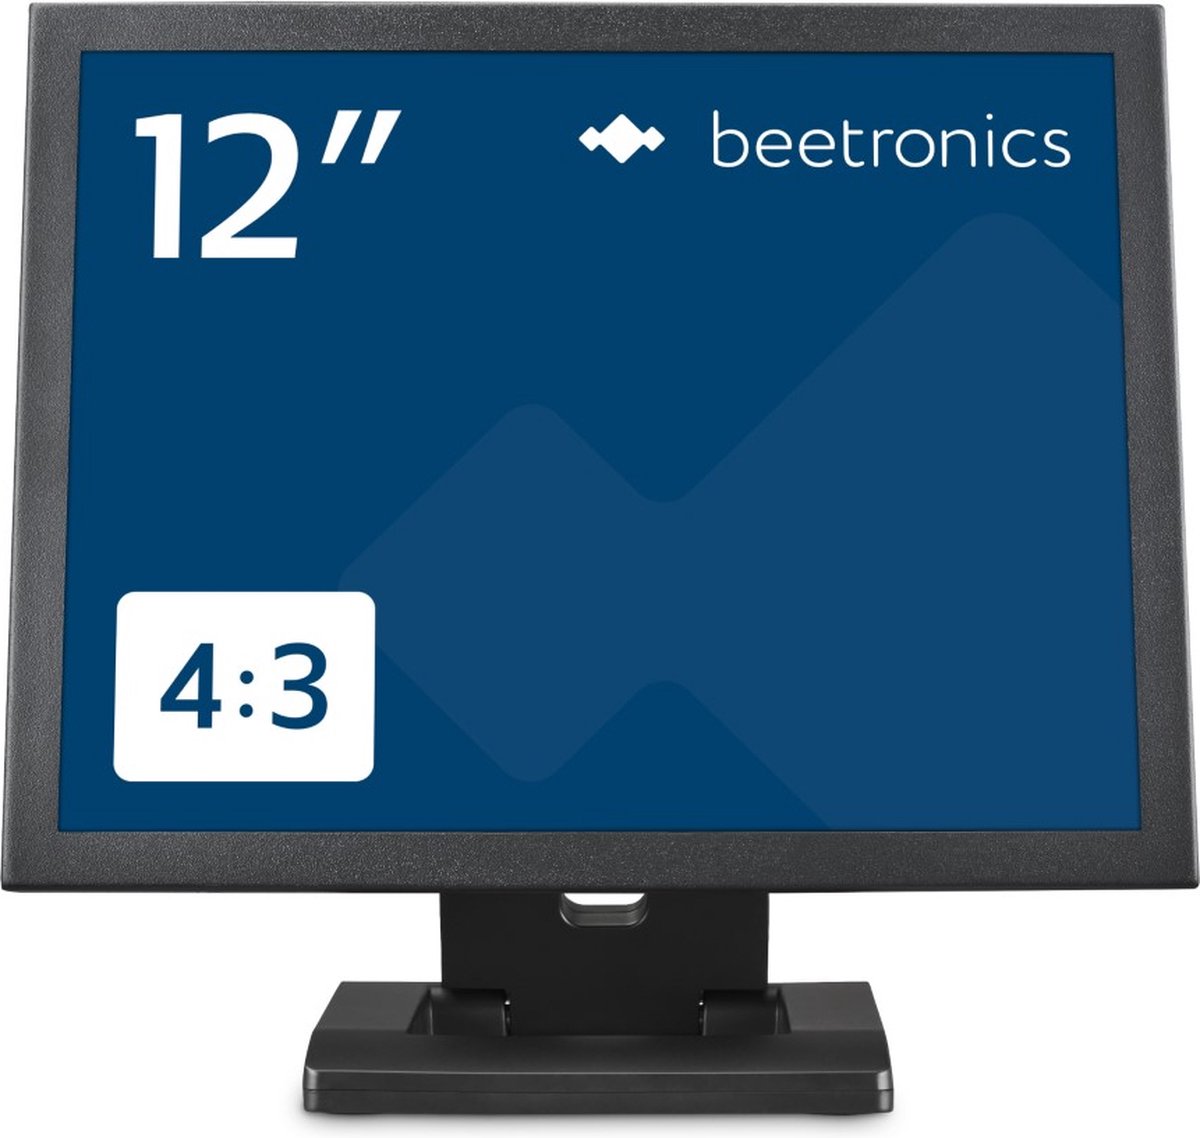 Beetronics 12 inch monitor metaal (4:3)